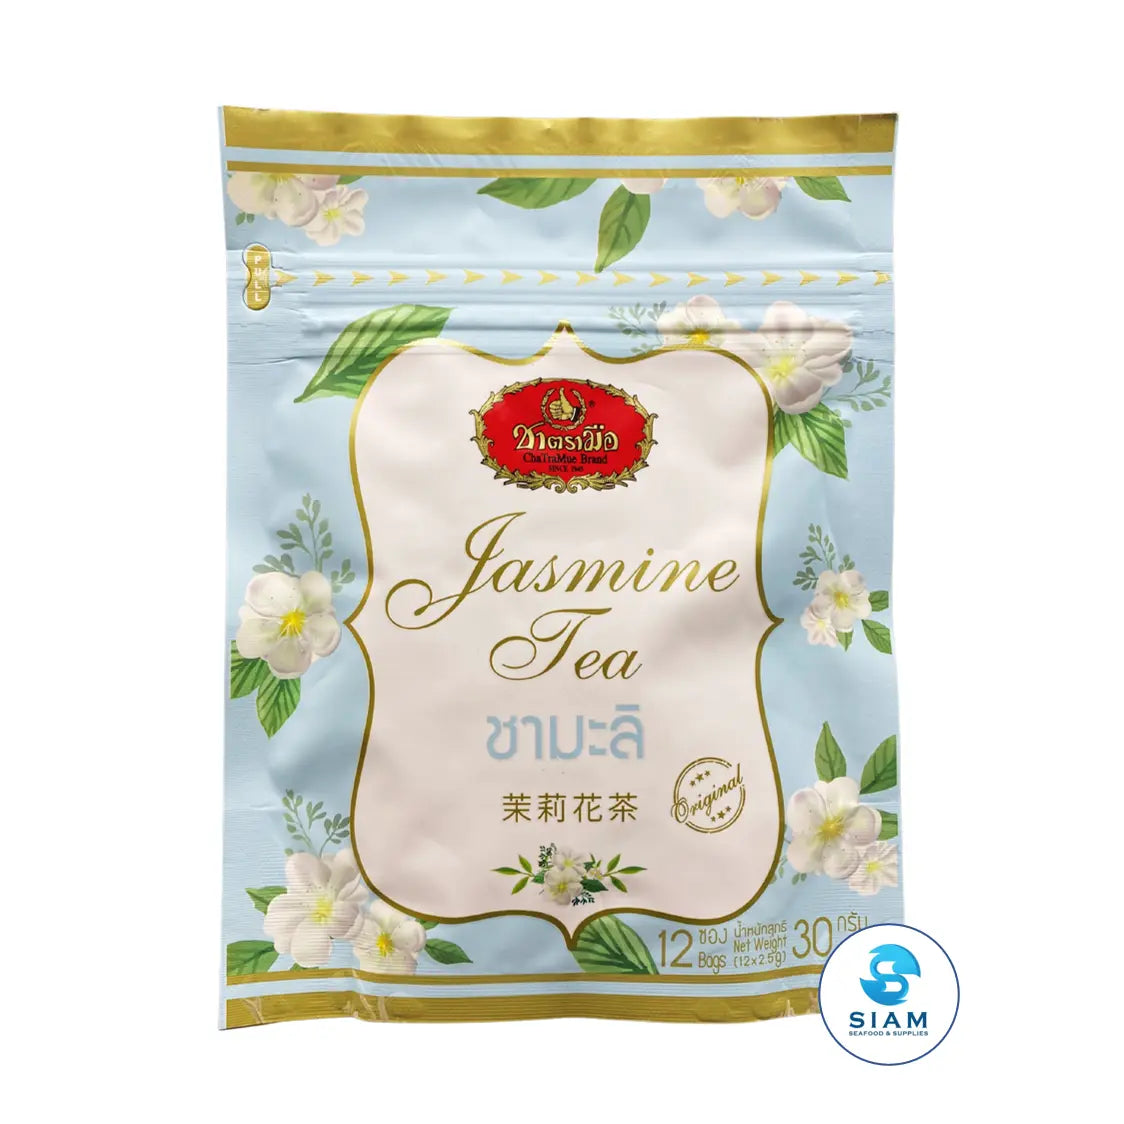 Jasmine Tea - ChaTraMue Brand (12 bags-Vol Wt 6.0 oz) ???????? ?????? ??shippable Chatramue